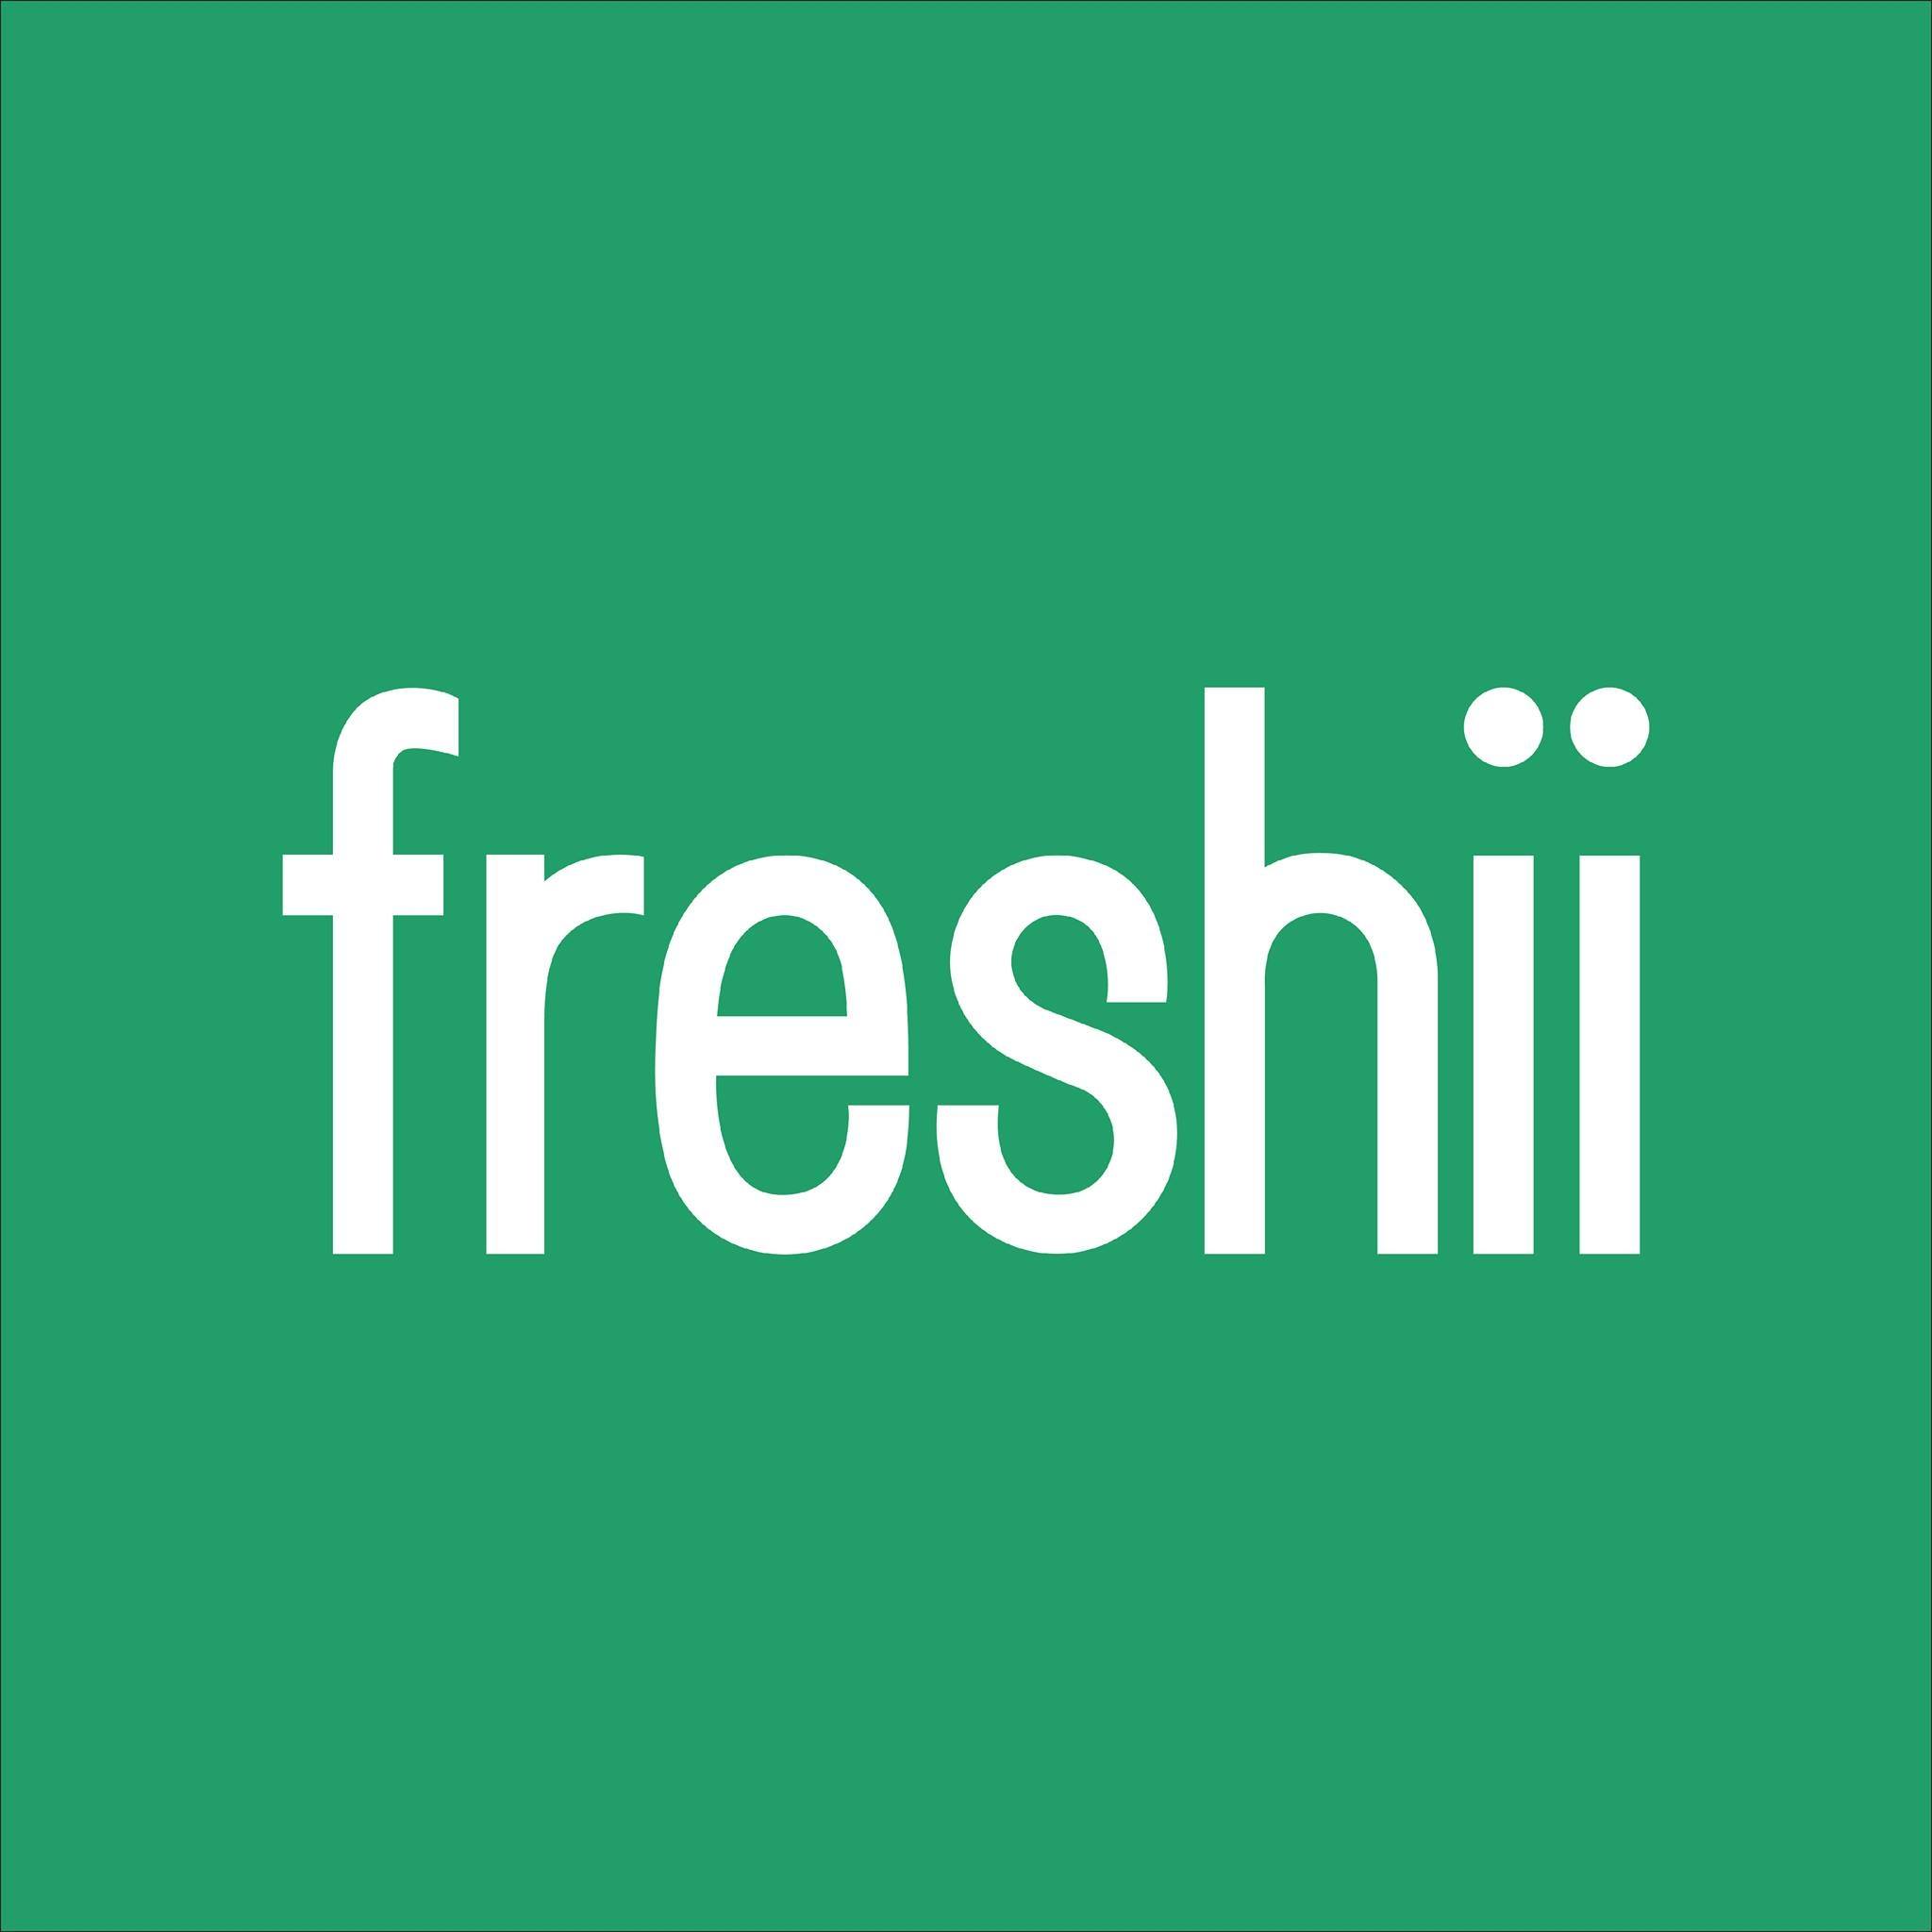 Freshii logo August 2019.jpg